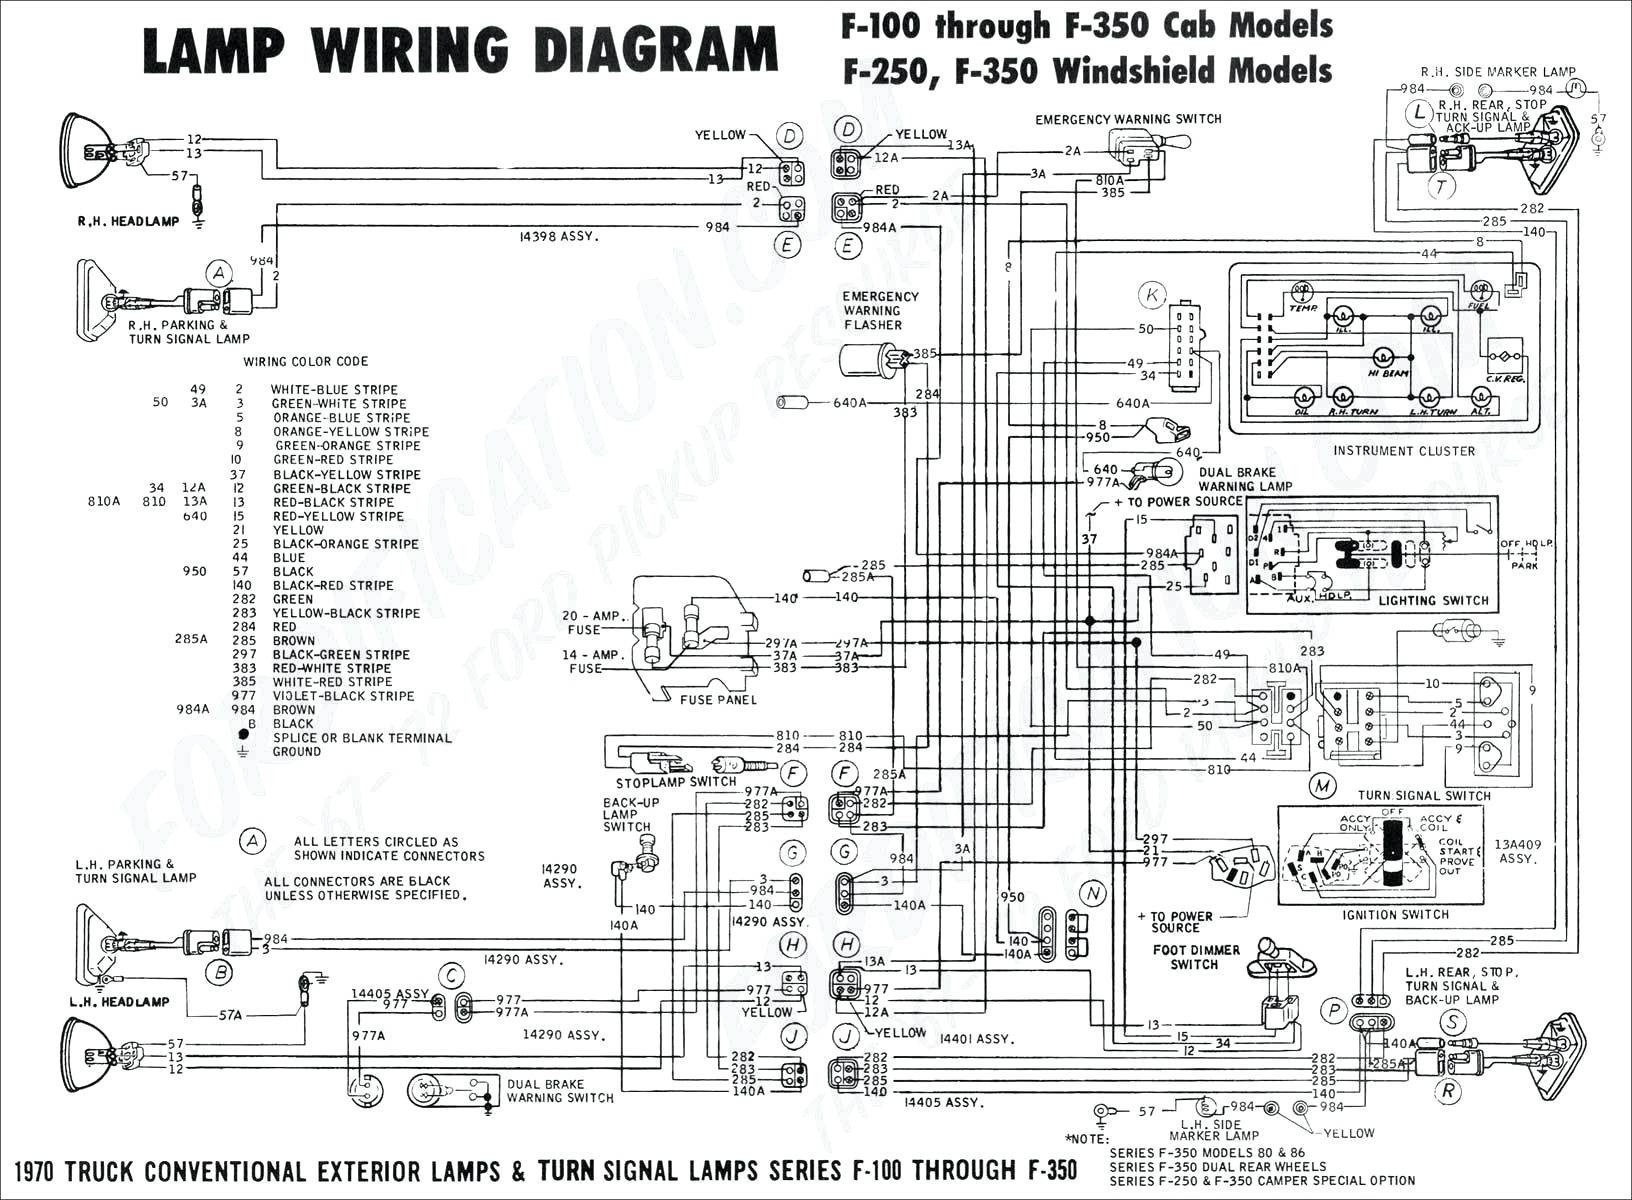 John Deere Wiring Diagrams Elegant Motorola Alternator Wiring Diagram John Deere Fresh Vw Golf Mk1